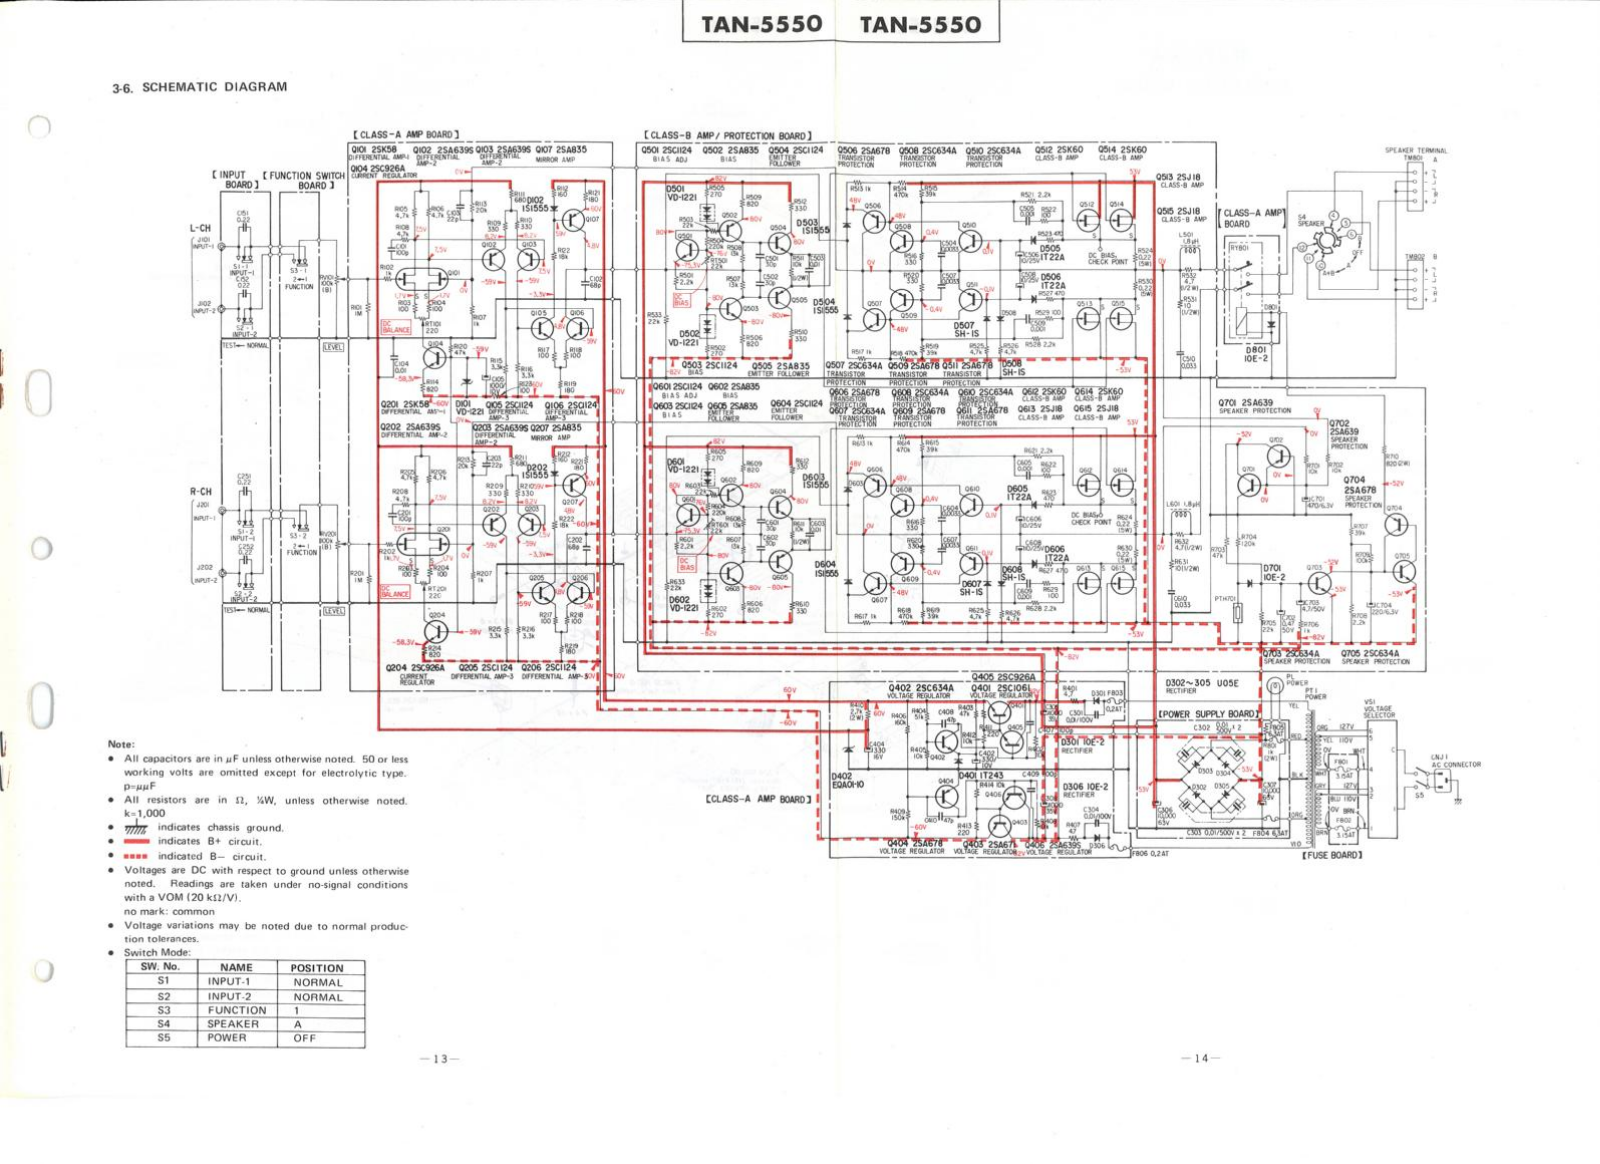 Sony TAN-5550 Schematic